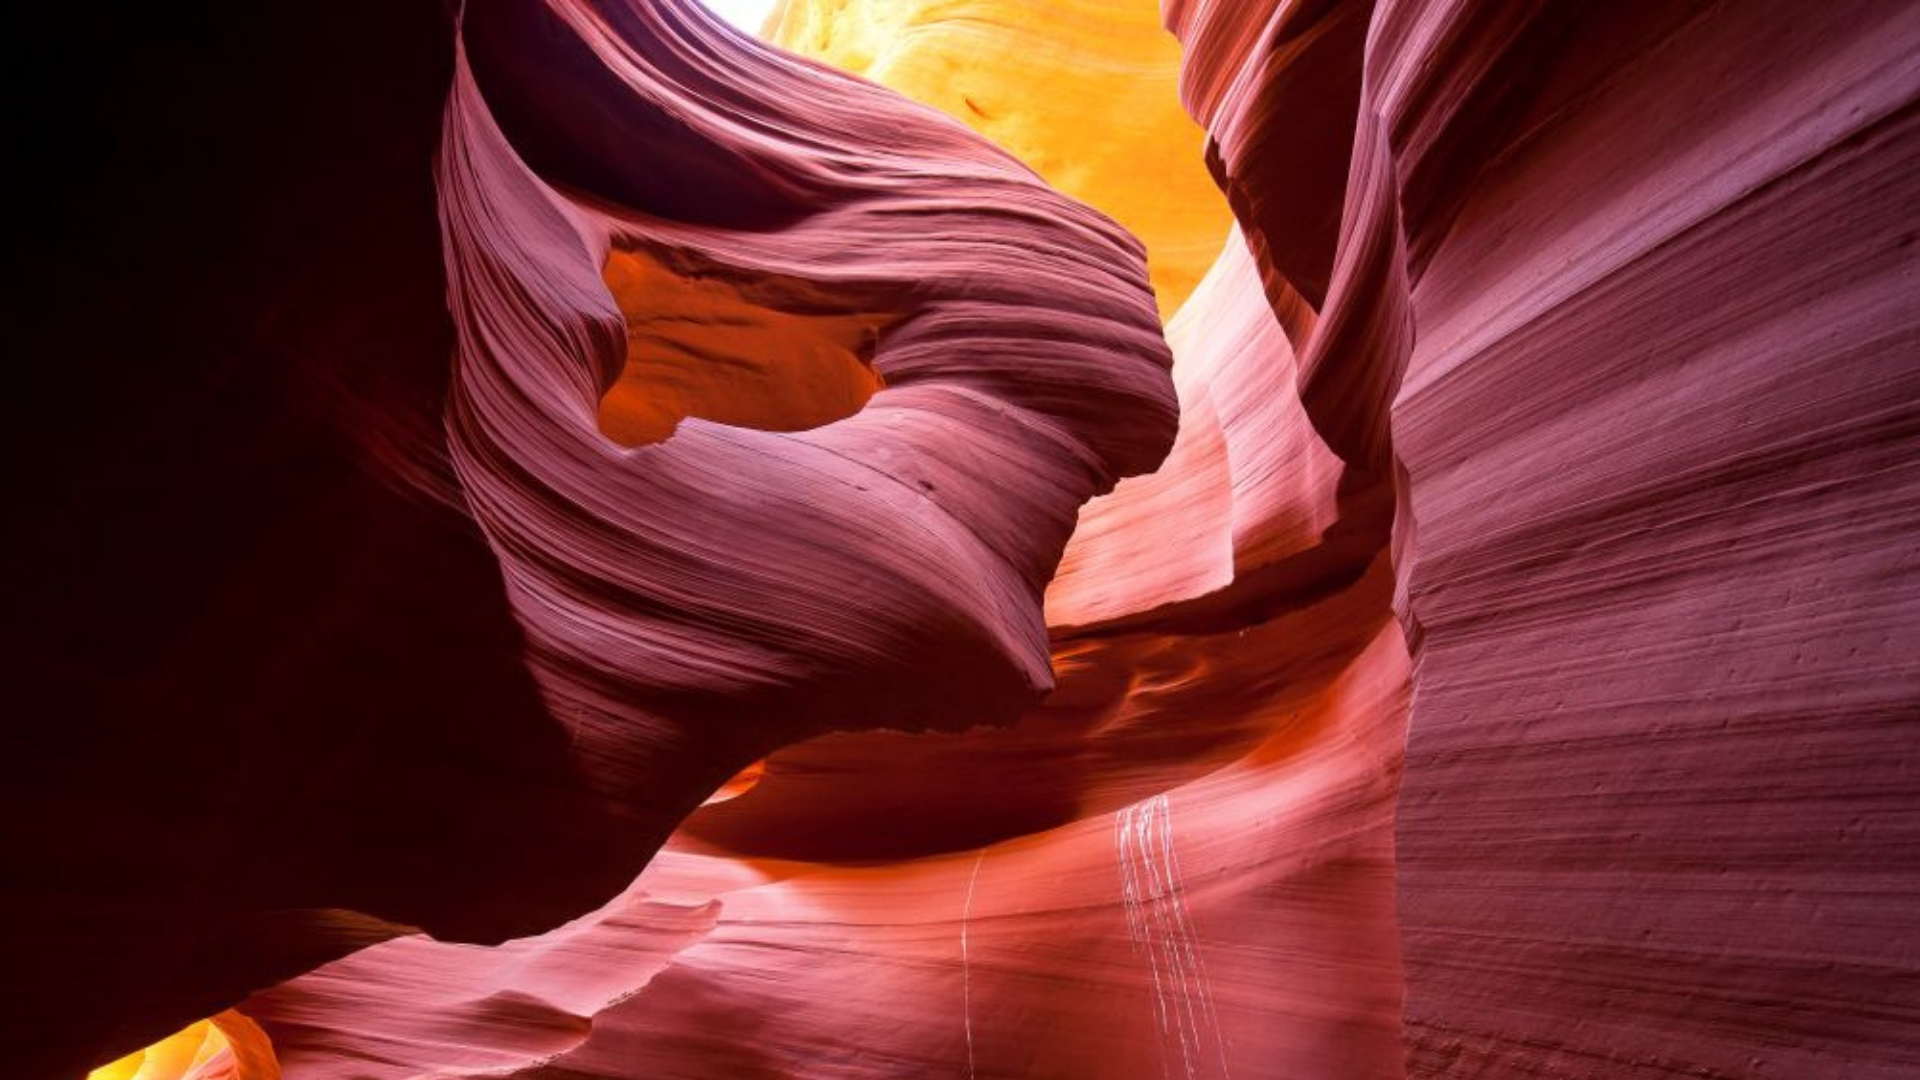 These Awe Inspiring Canyons Exhibit The Most Unusual Shade Of Awakening